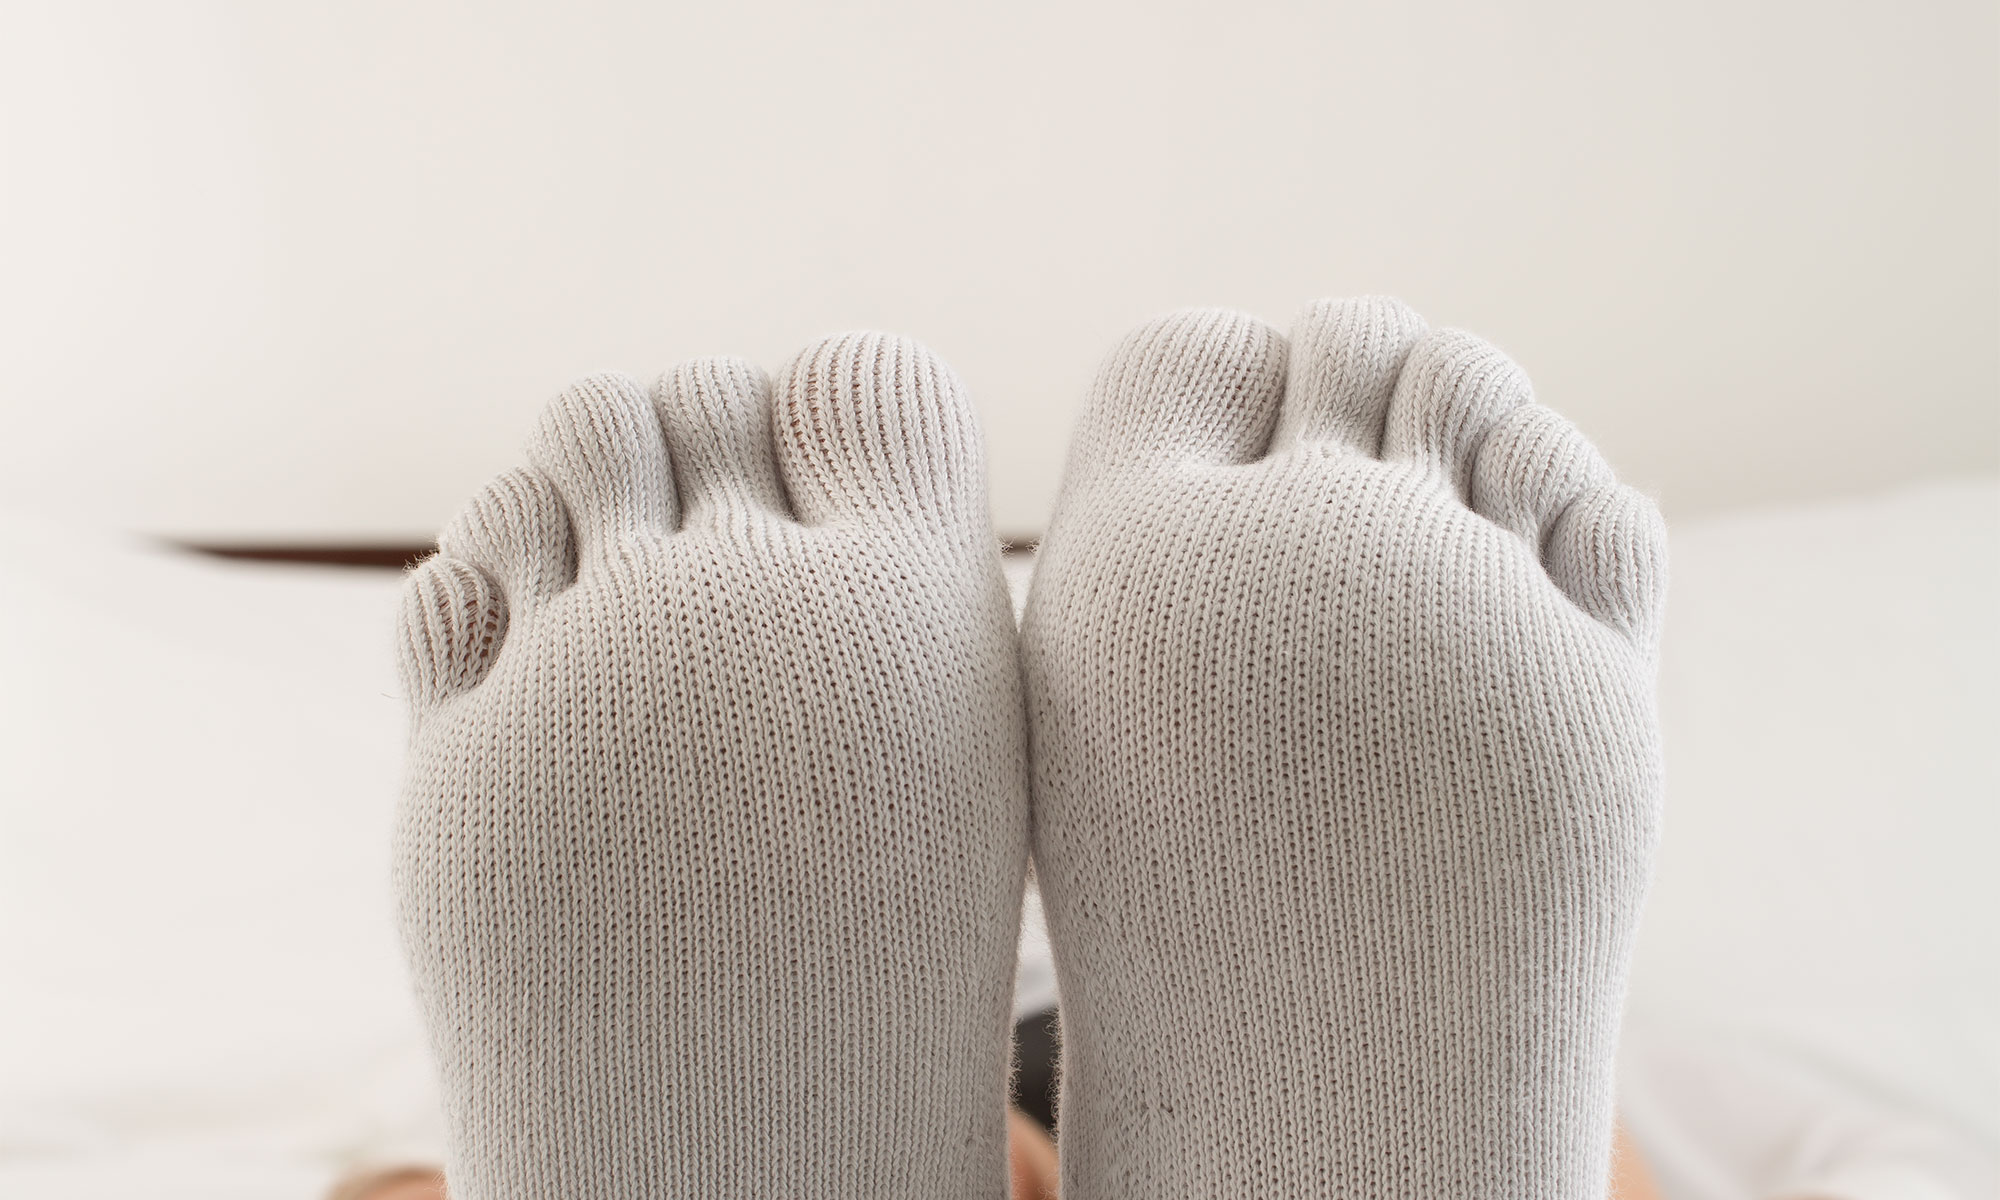 Sensitive Diabetic toe socks and feet